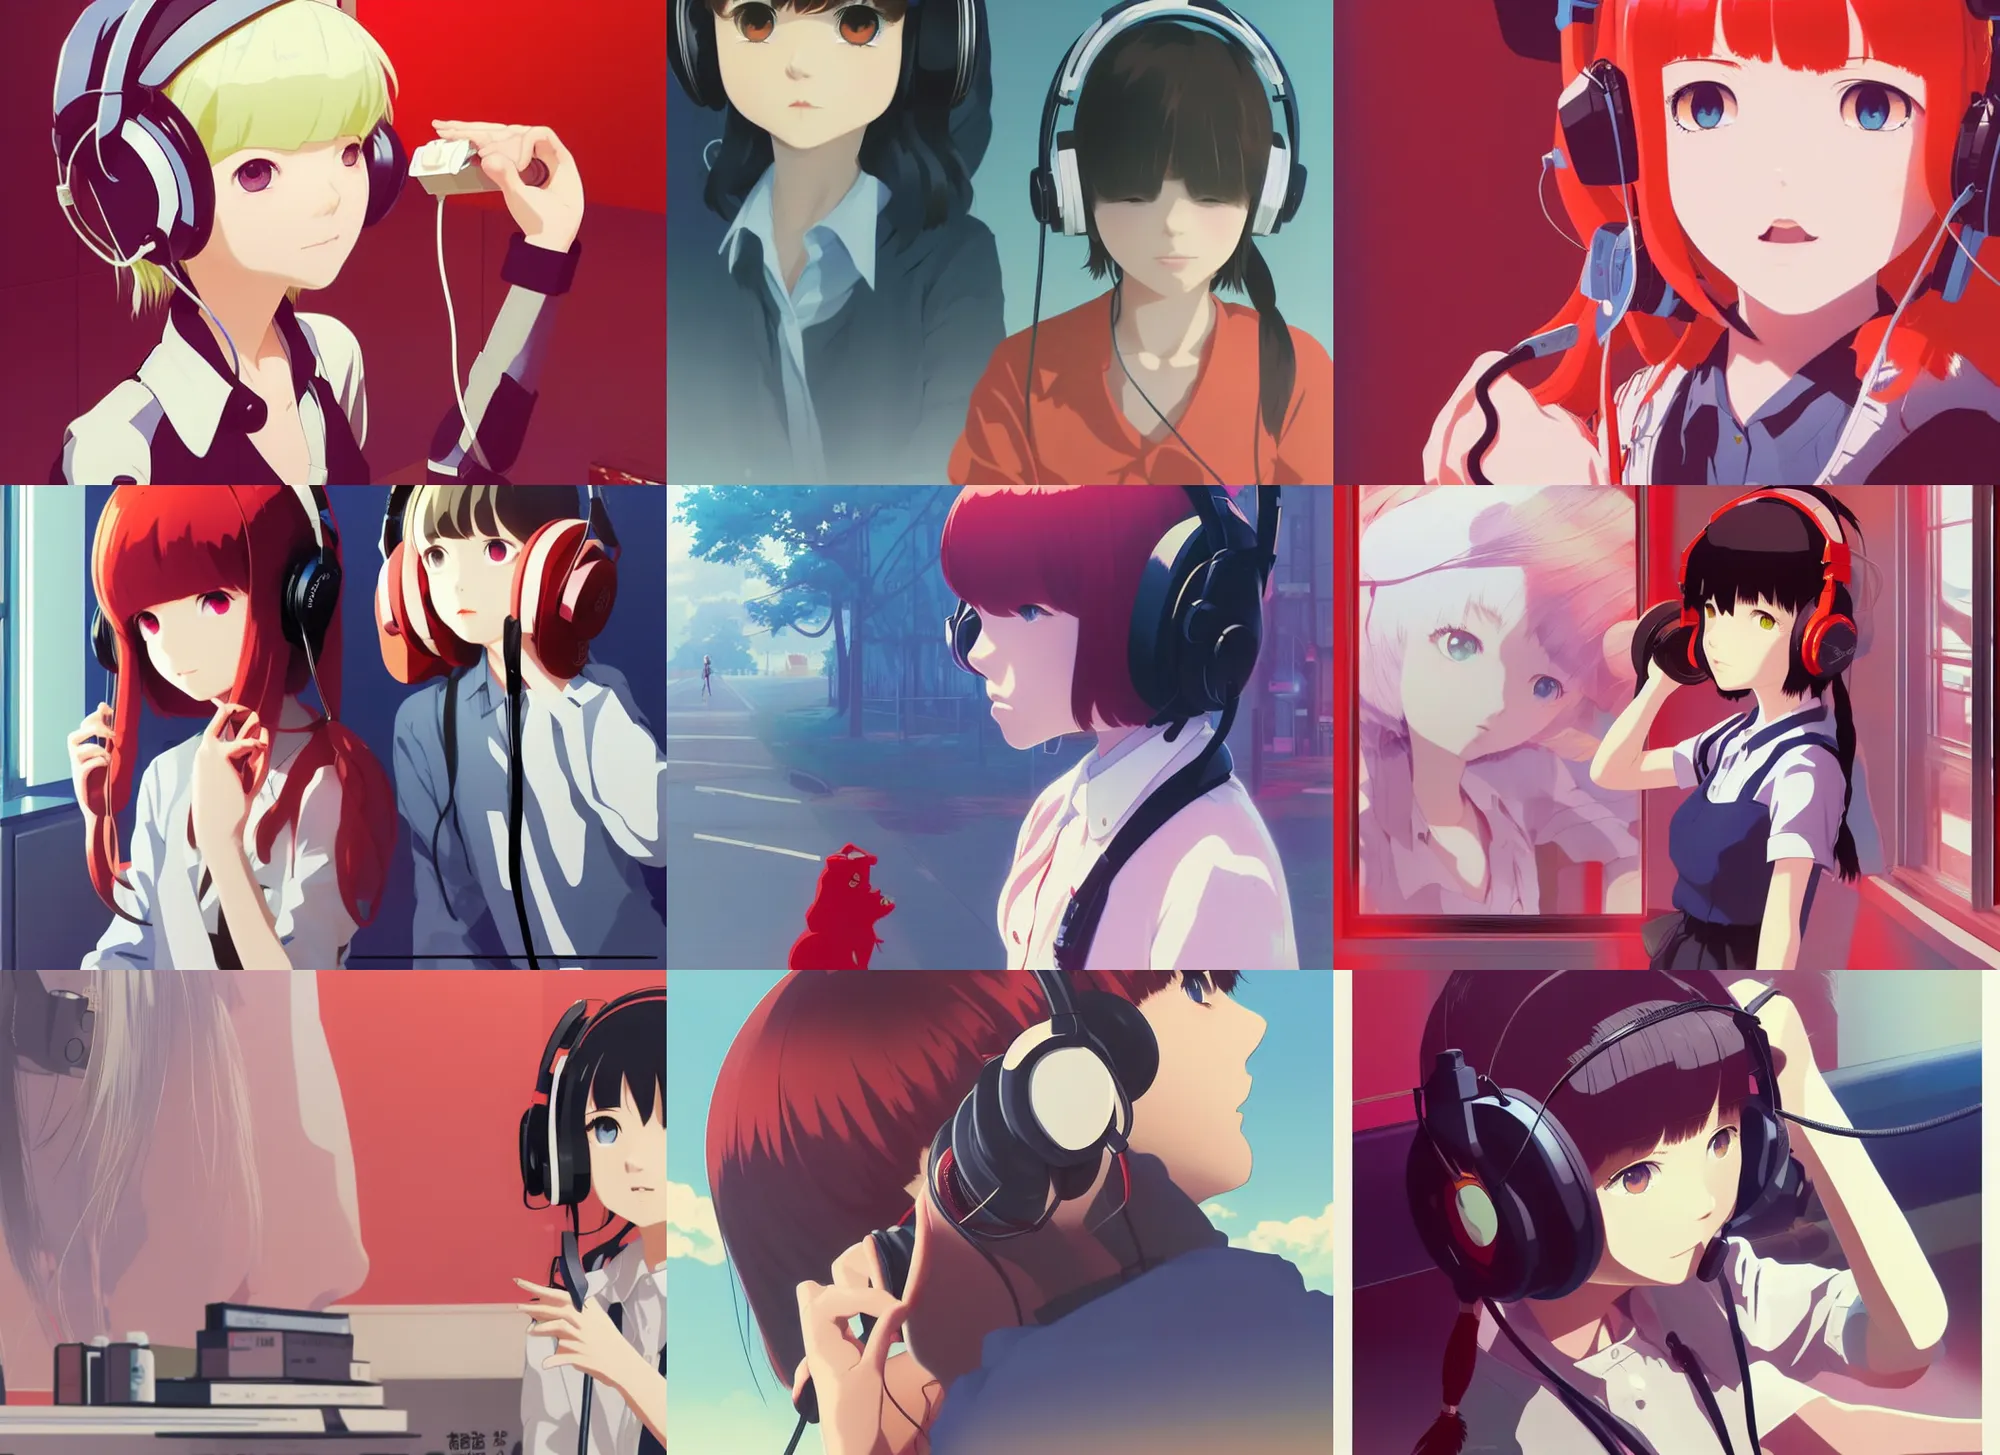 Prompt: poster by ilya kuvshinov, yoh yoshinari, makoto shinkai, katsuhiro otomo, anime visual of a cute girl, with + ( ( red eyes ) ) + long white hair + ( ( wearing a headset in her room interior ) )